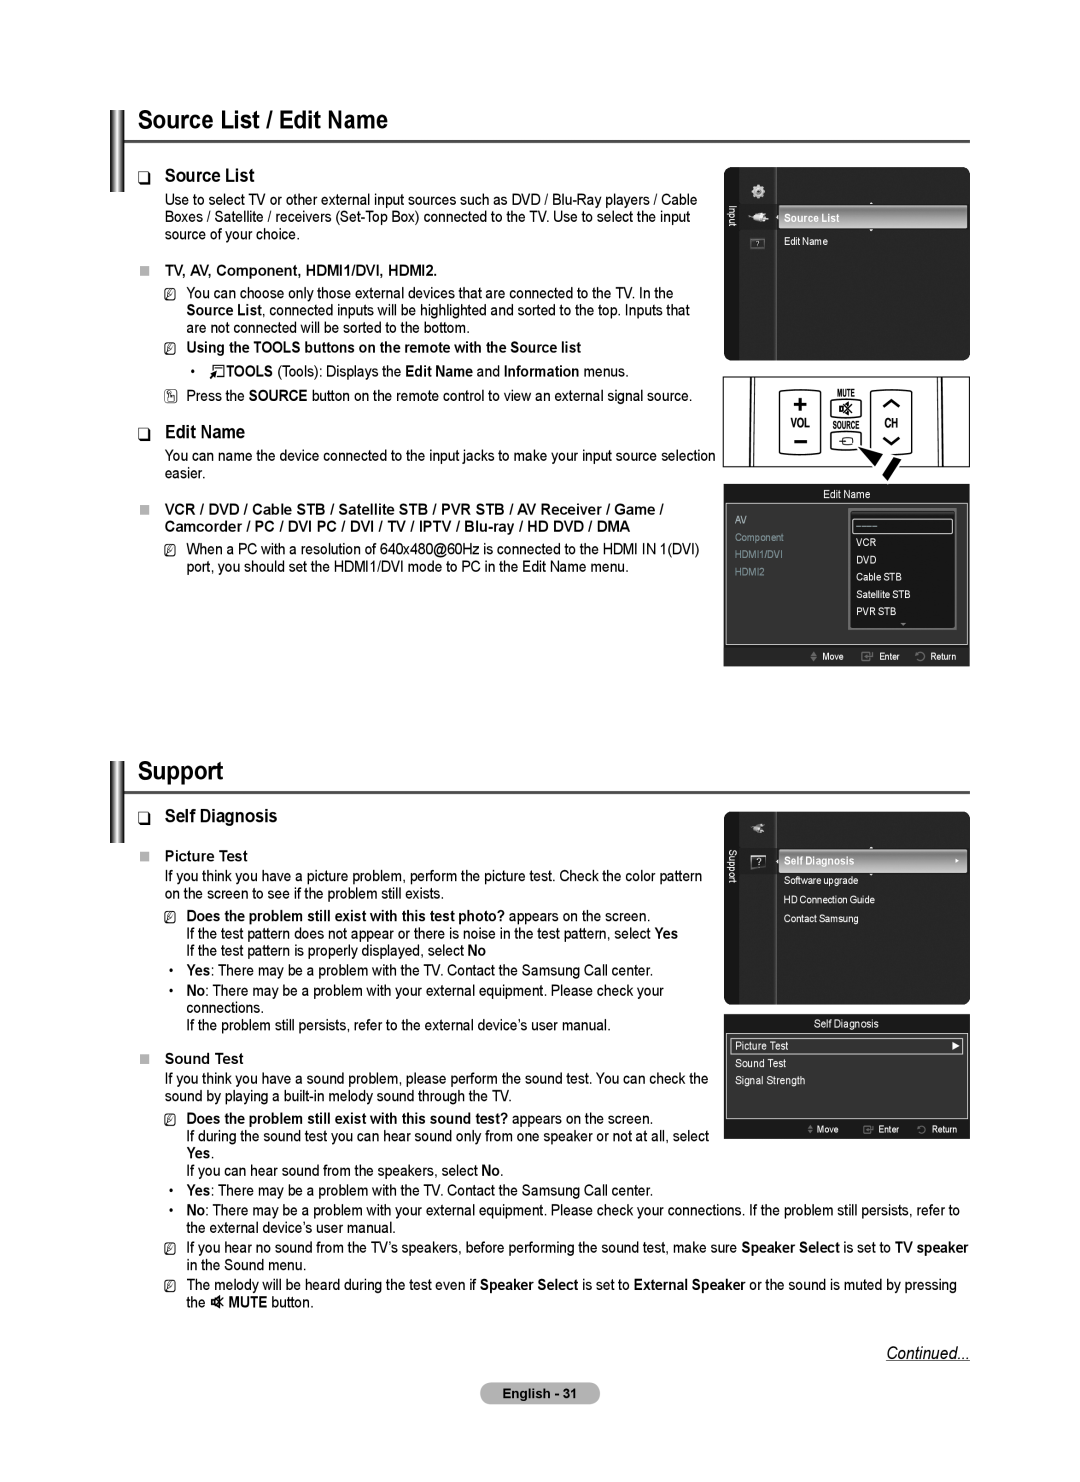 Samsung BN68-02426A-00 Source List, Edit Name, Self Diagnosis, Continued, „„ TV, AV, Component, HDMI1/DVI, HDMI2 